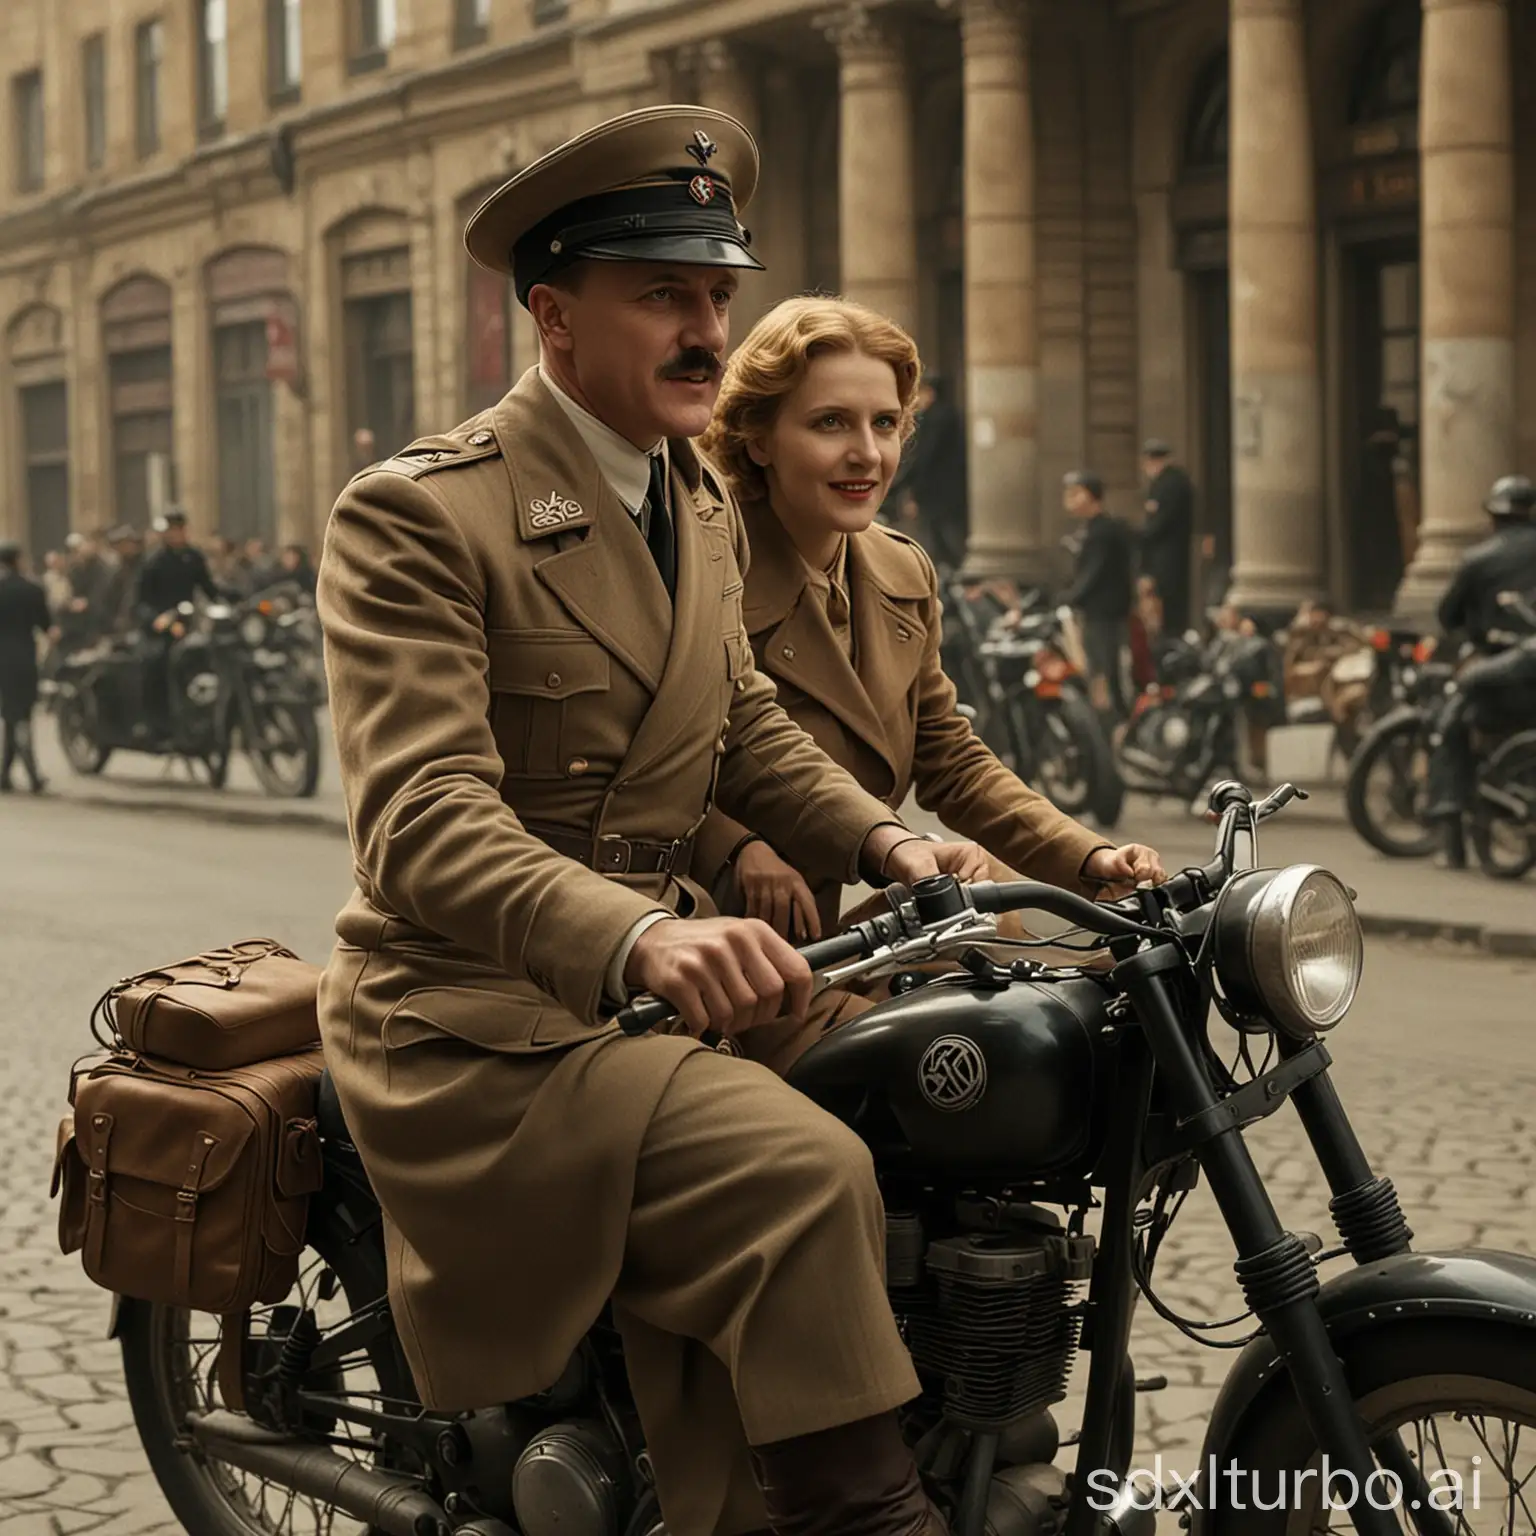 Hitler-and-Eva-Braun-Riding-Motorcycle-in-Babylon-Berlin